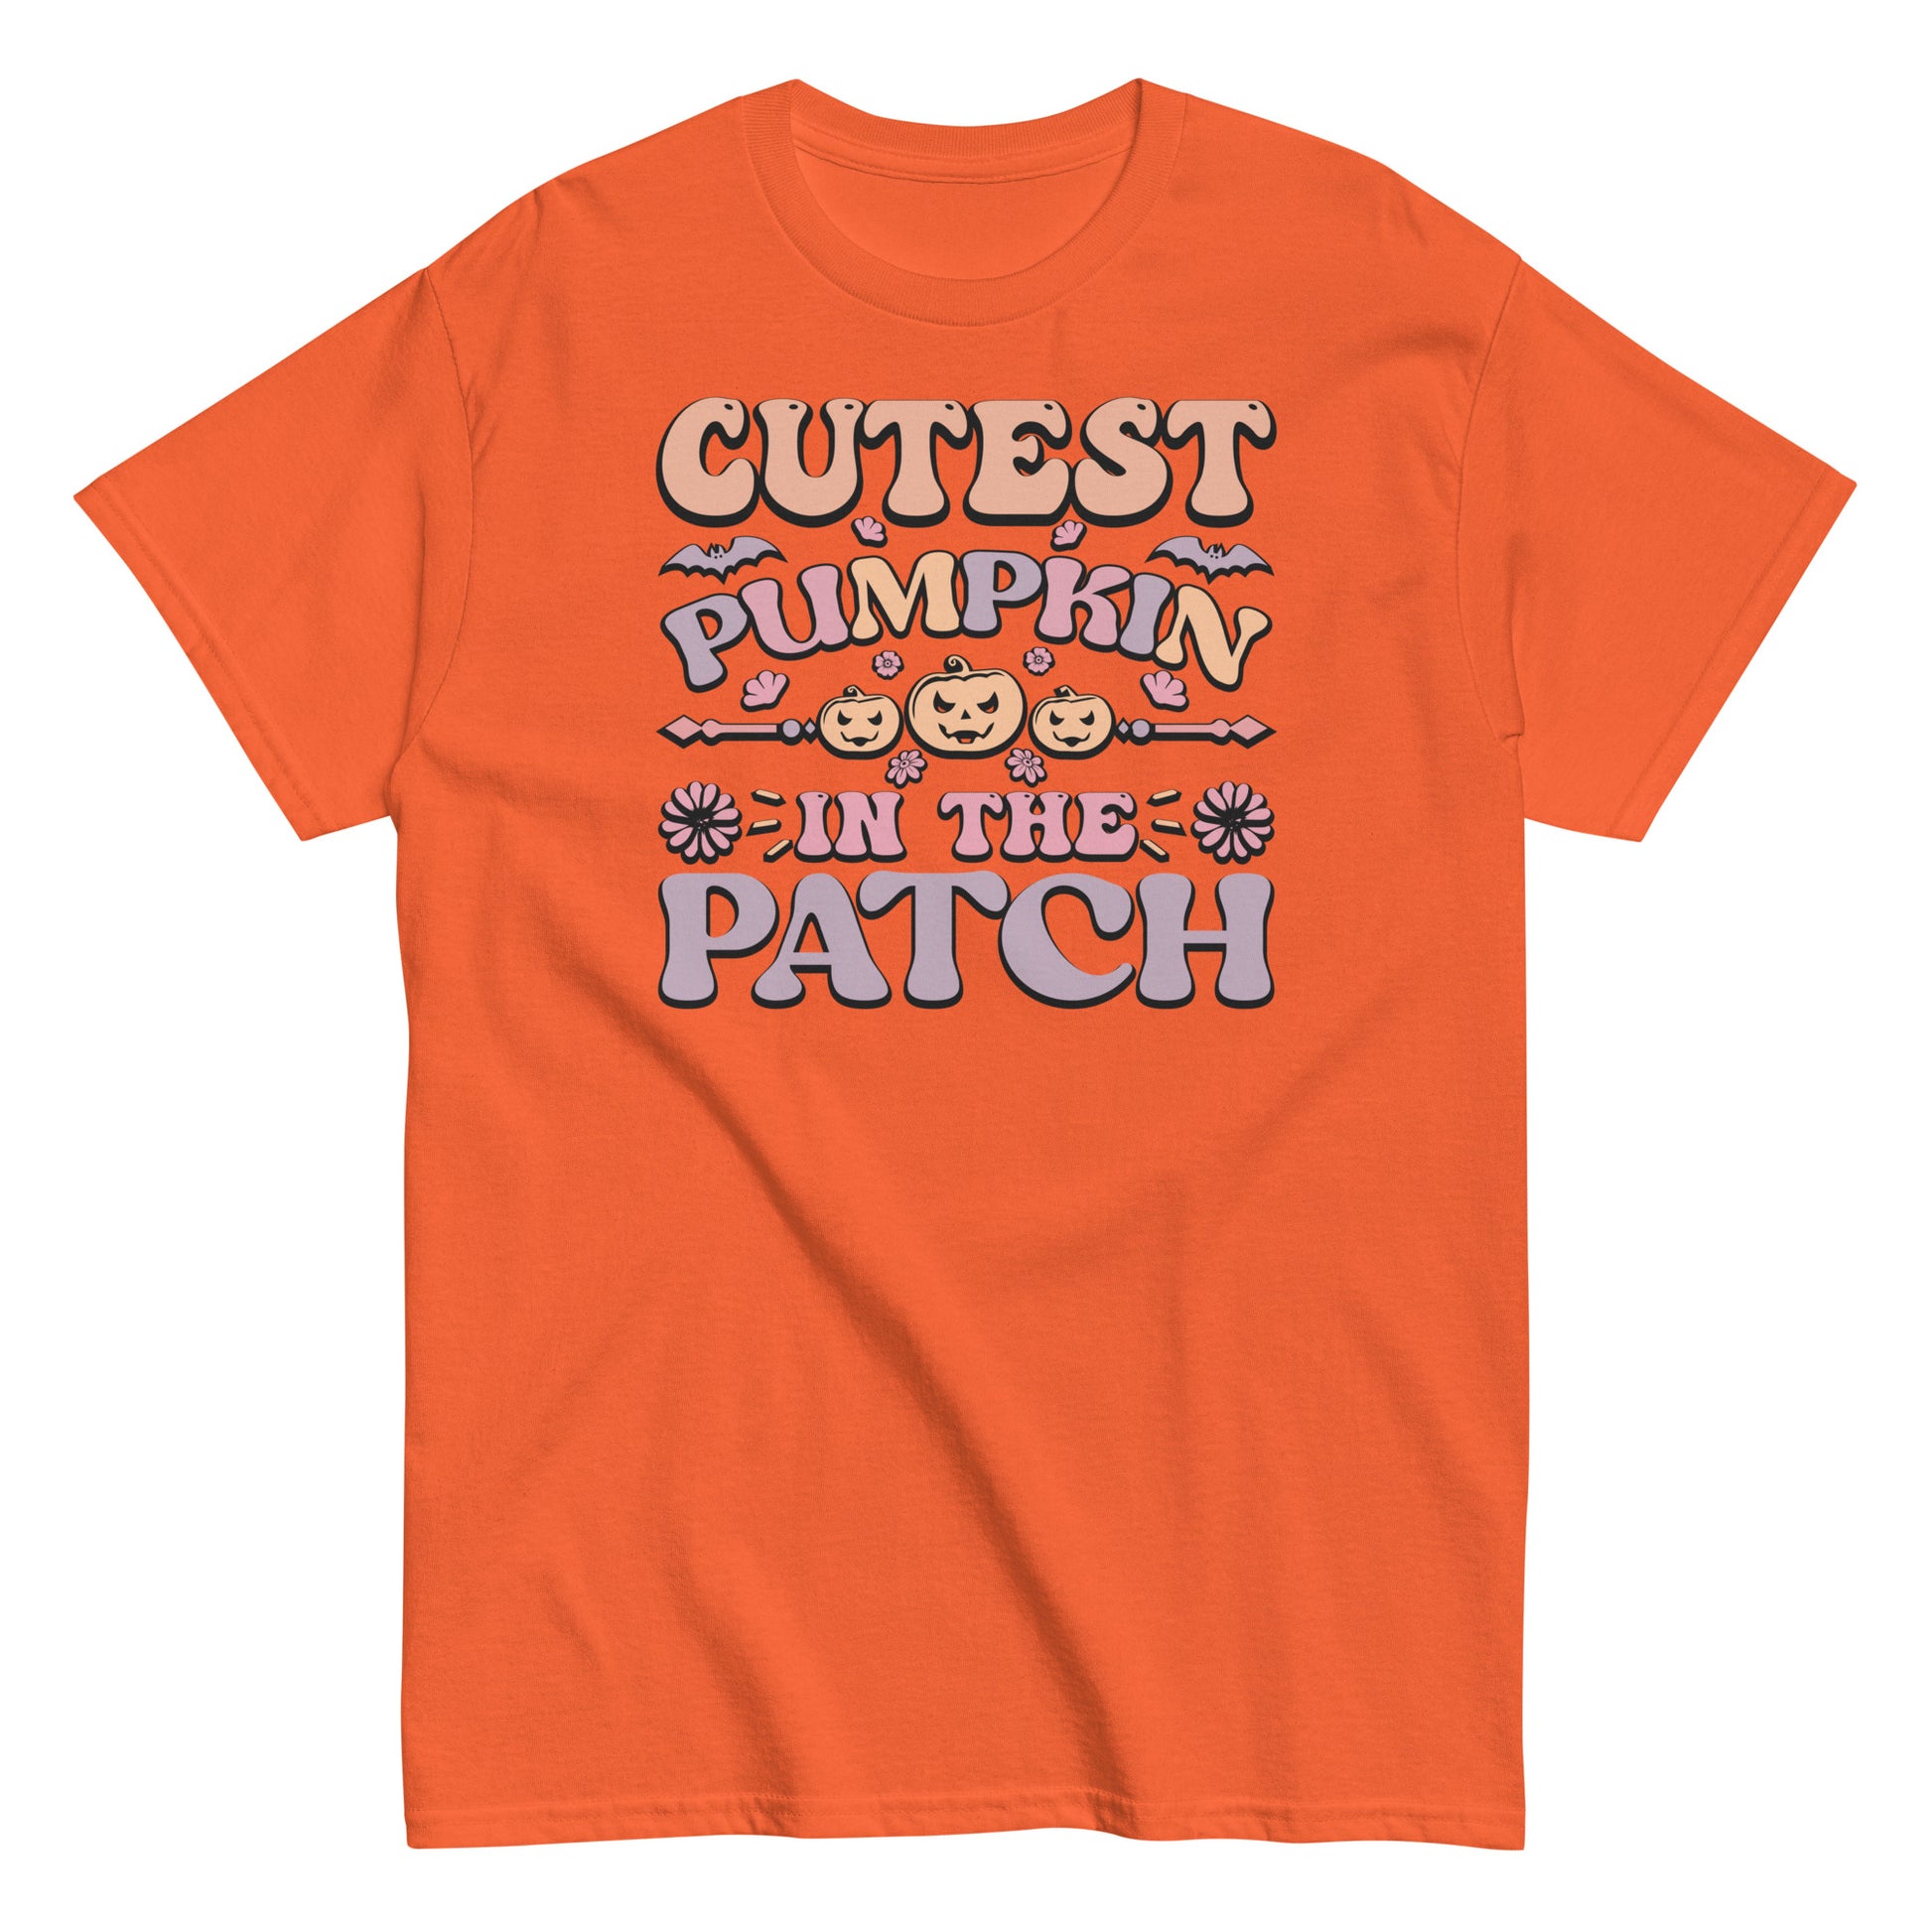 Retro Charm: Cutest Pumpkin In The Patch Tee